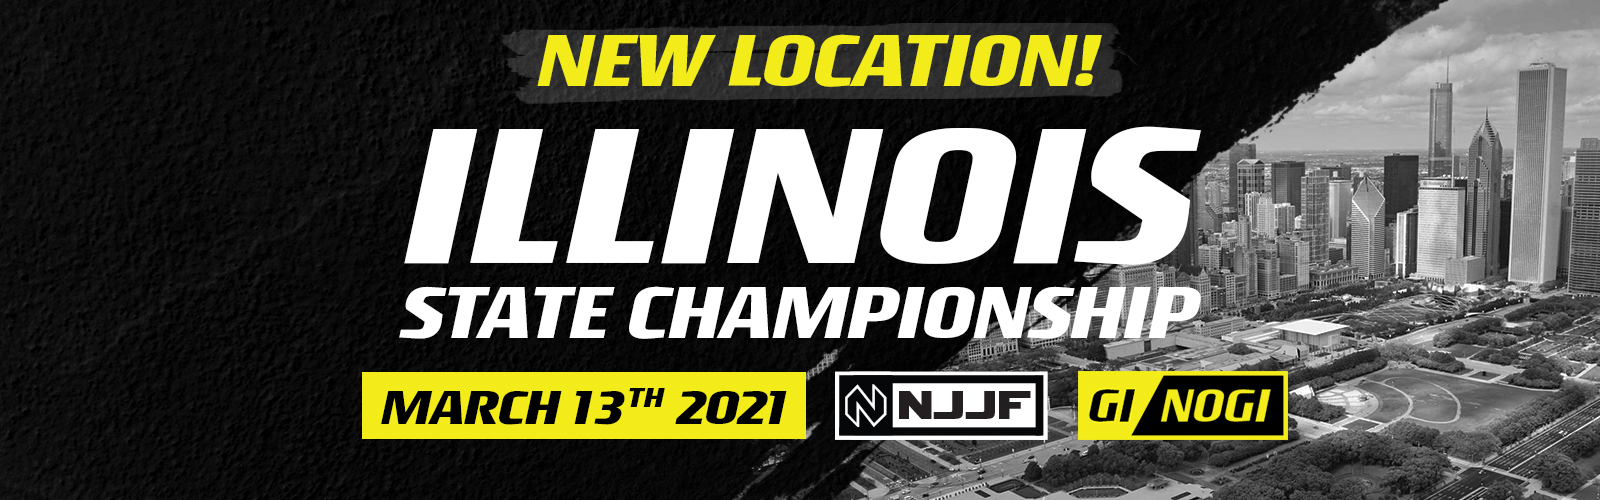 Illinois State Championship